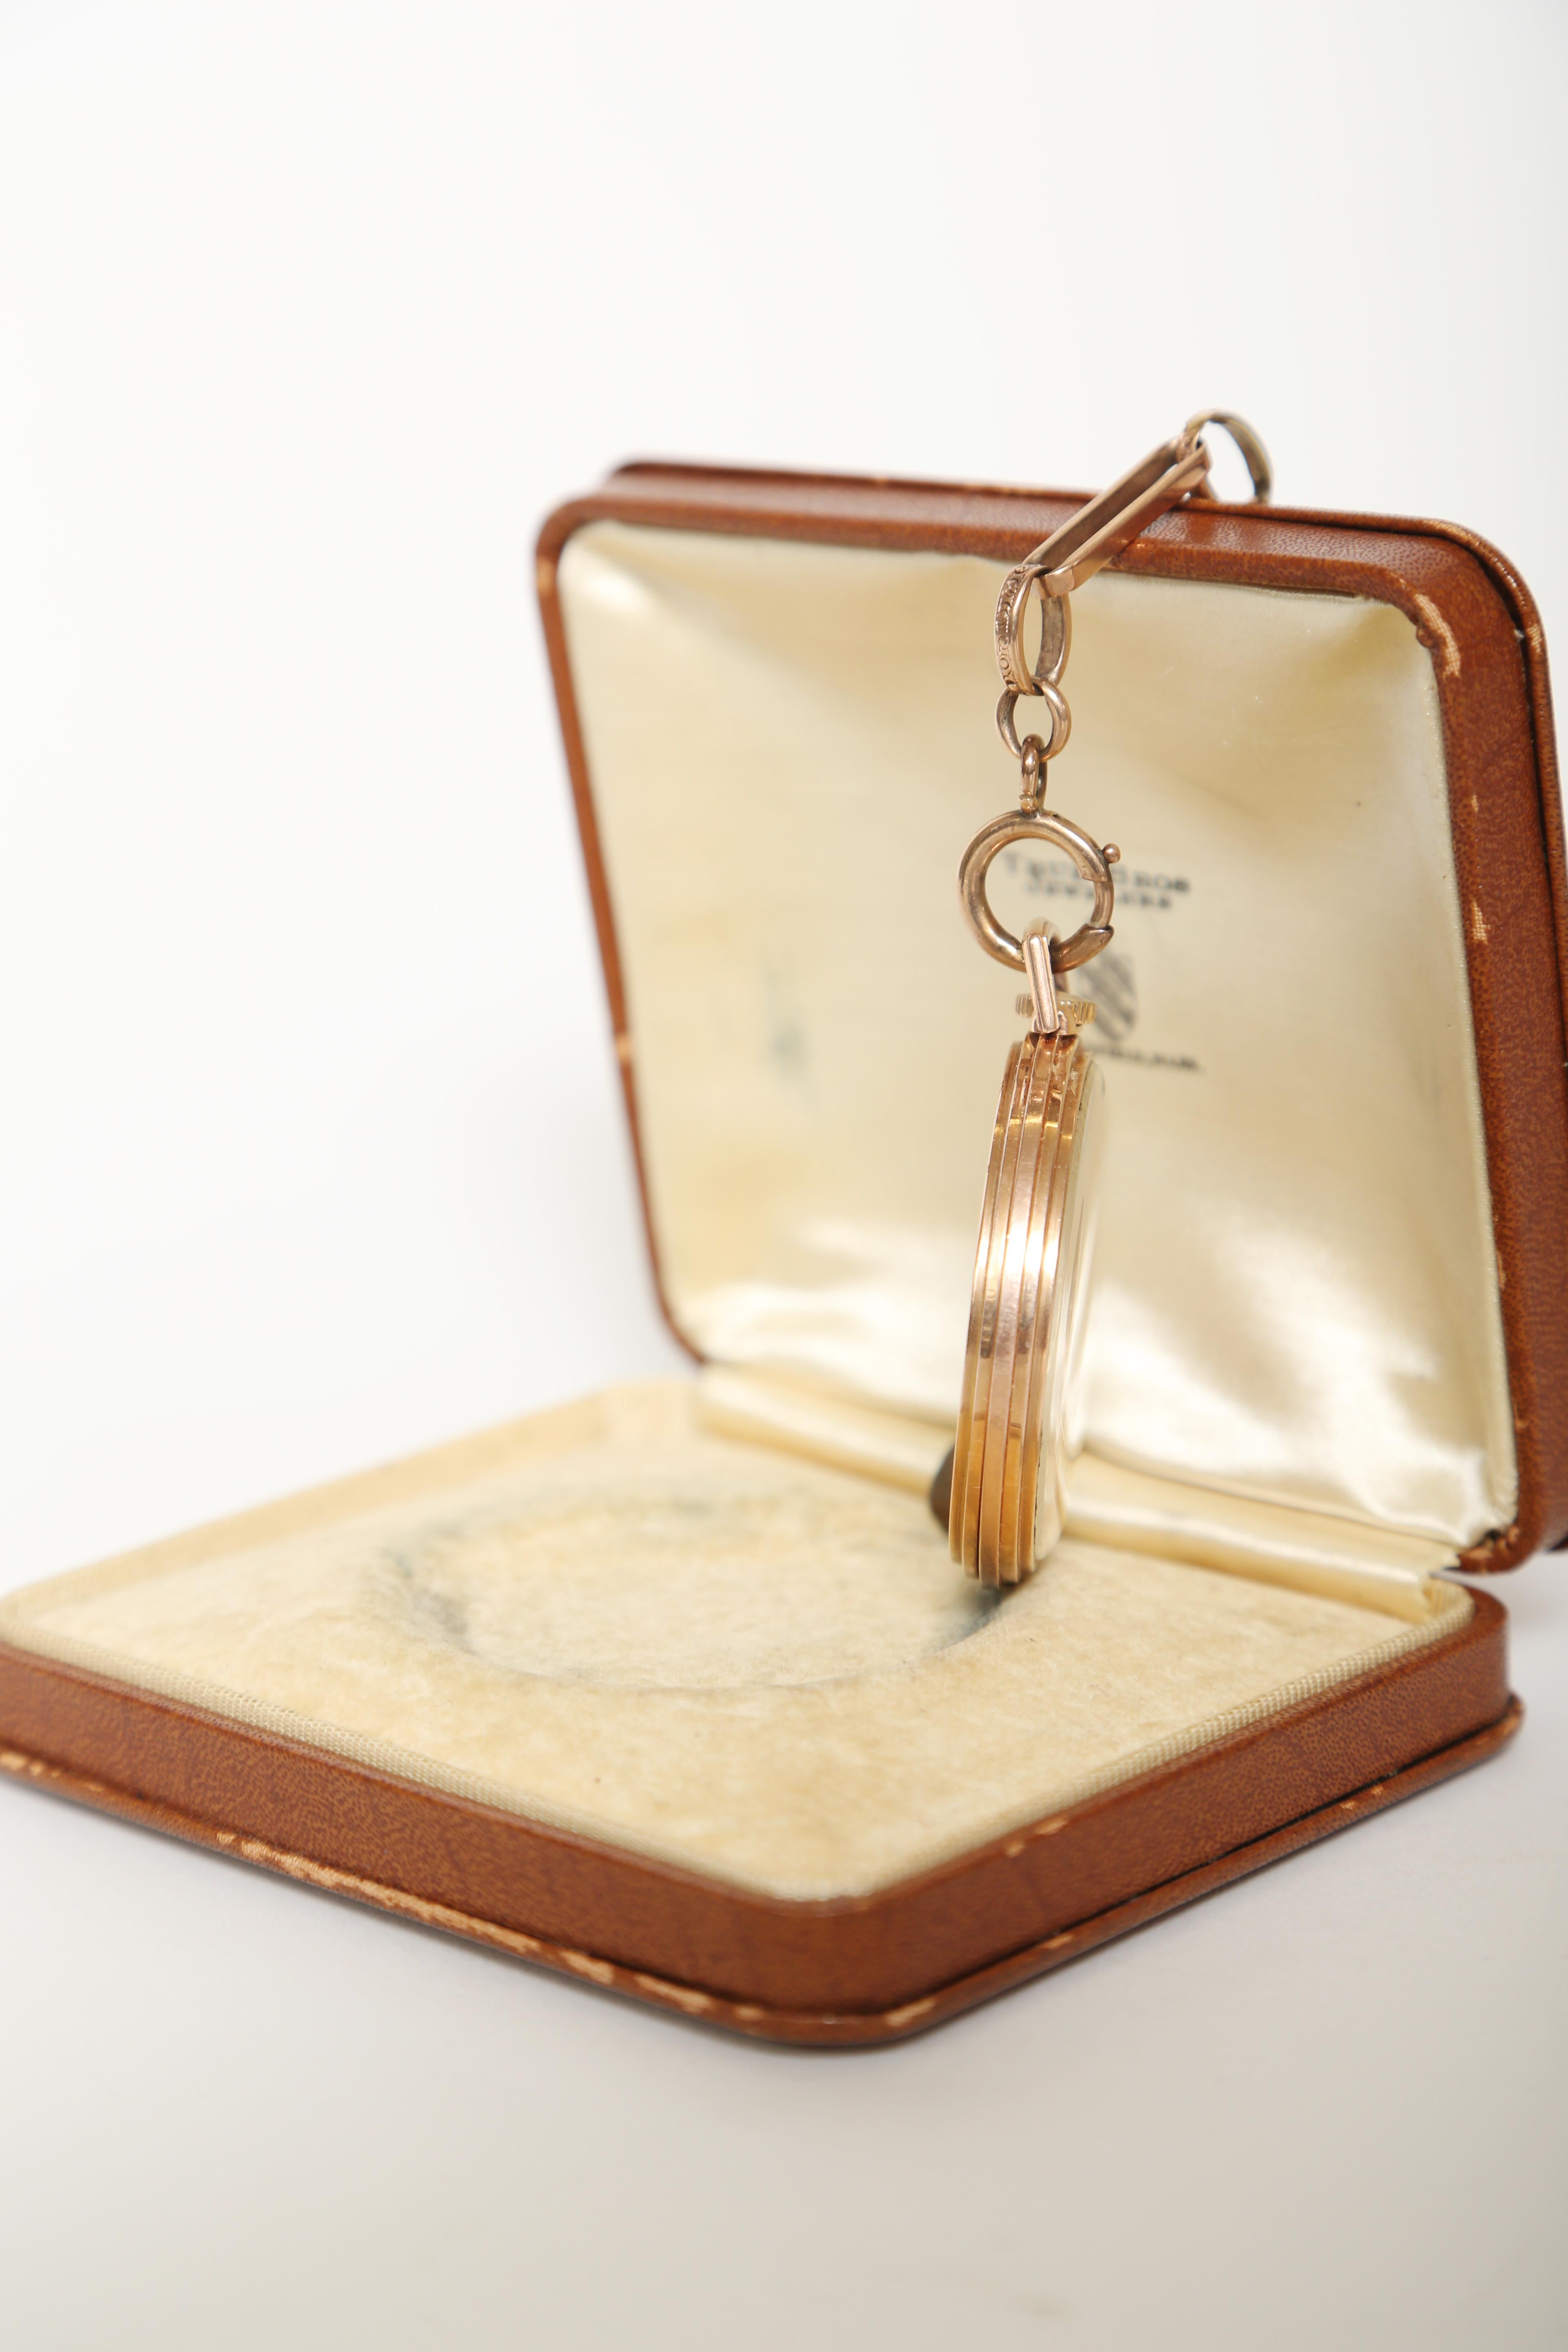 The Hamilton Watch Company 14 Karat Rose Gold Slim Pocket Watch and Chain-1916 8